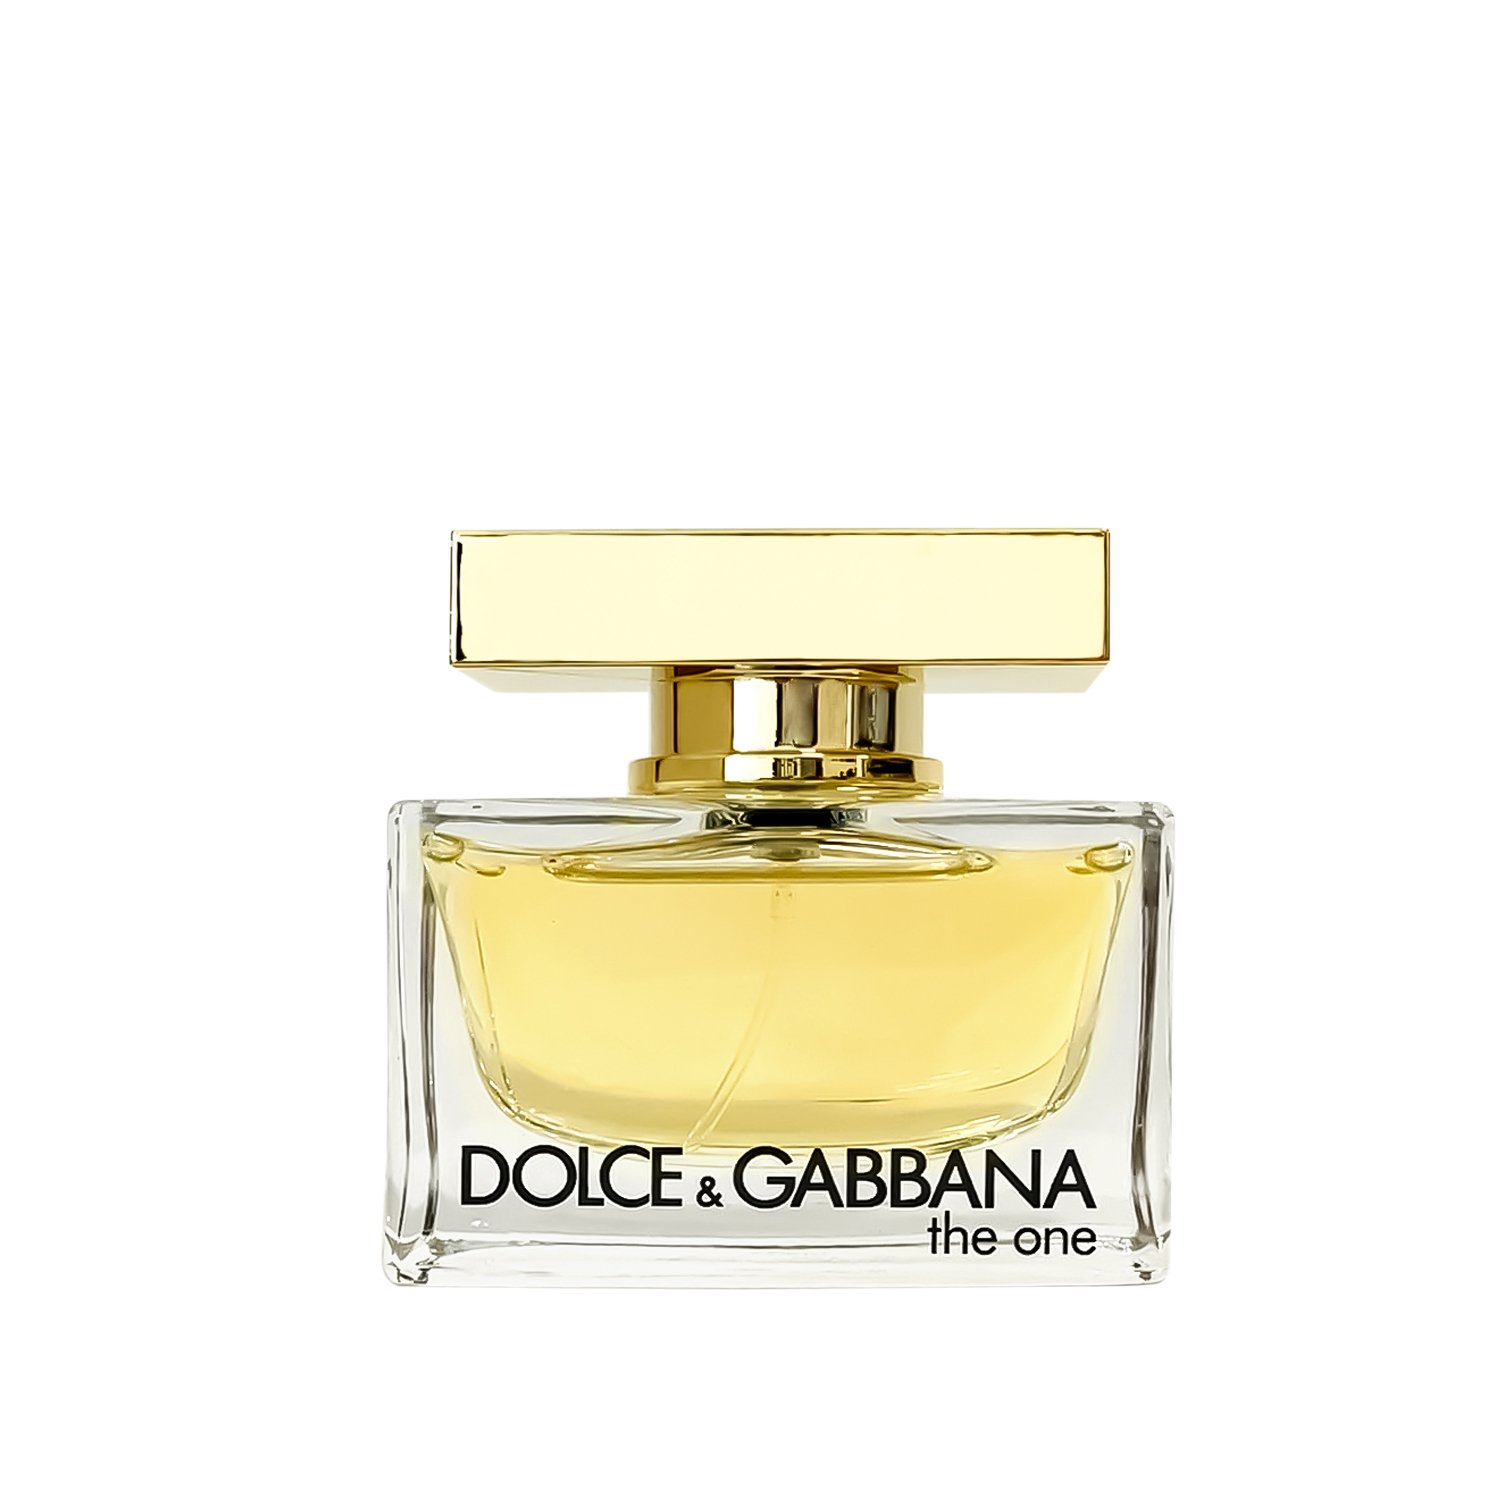 Dolce & Gabbana The One for Women Eau de Parfum - 50ml